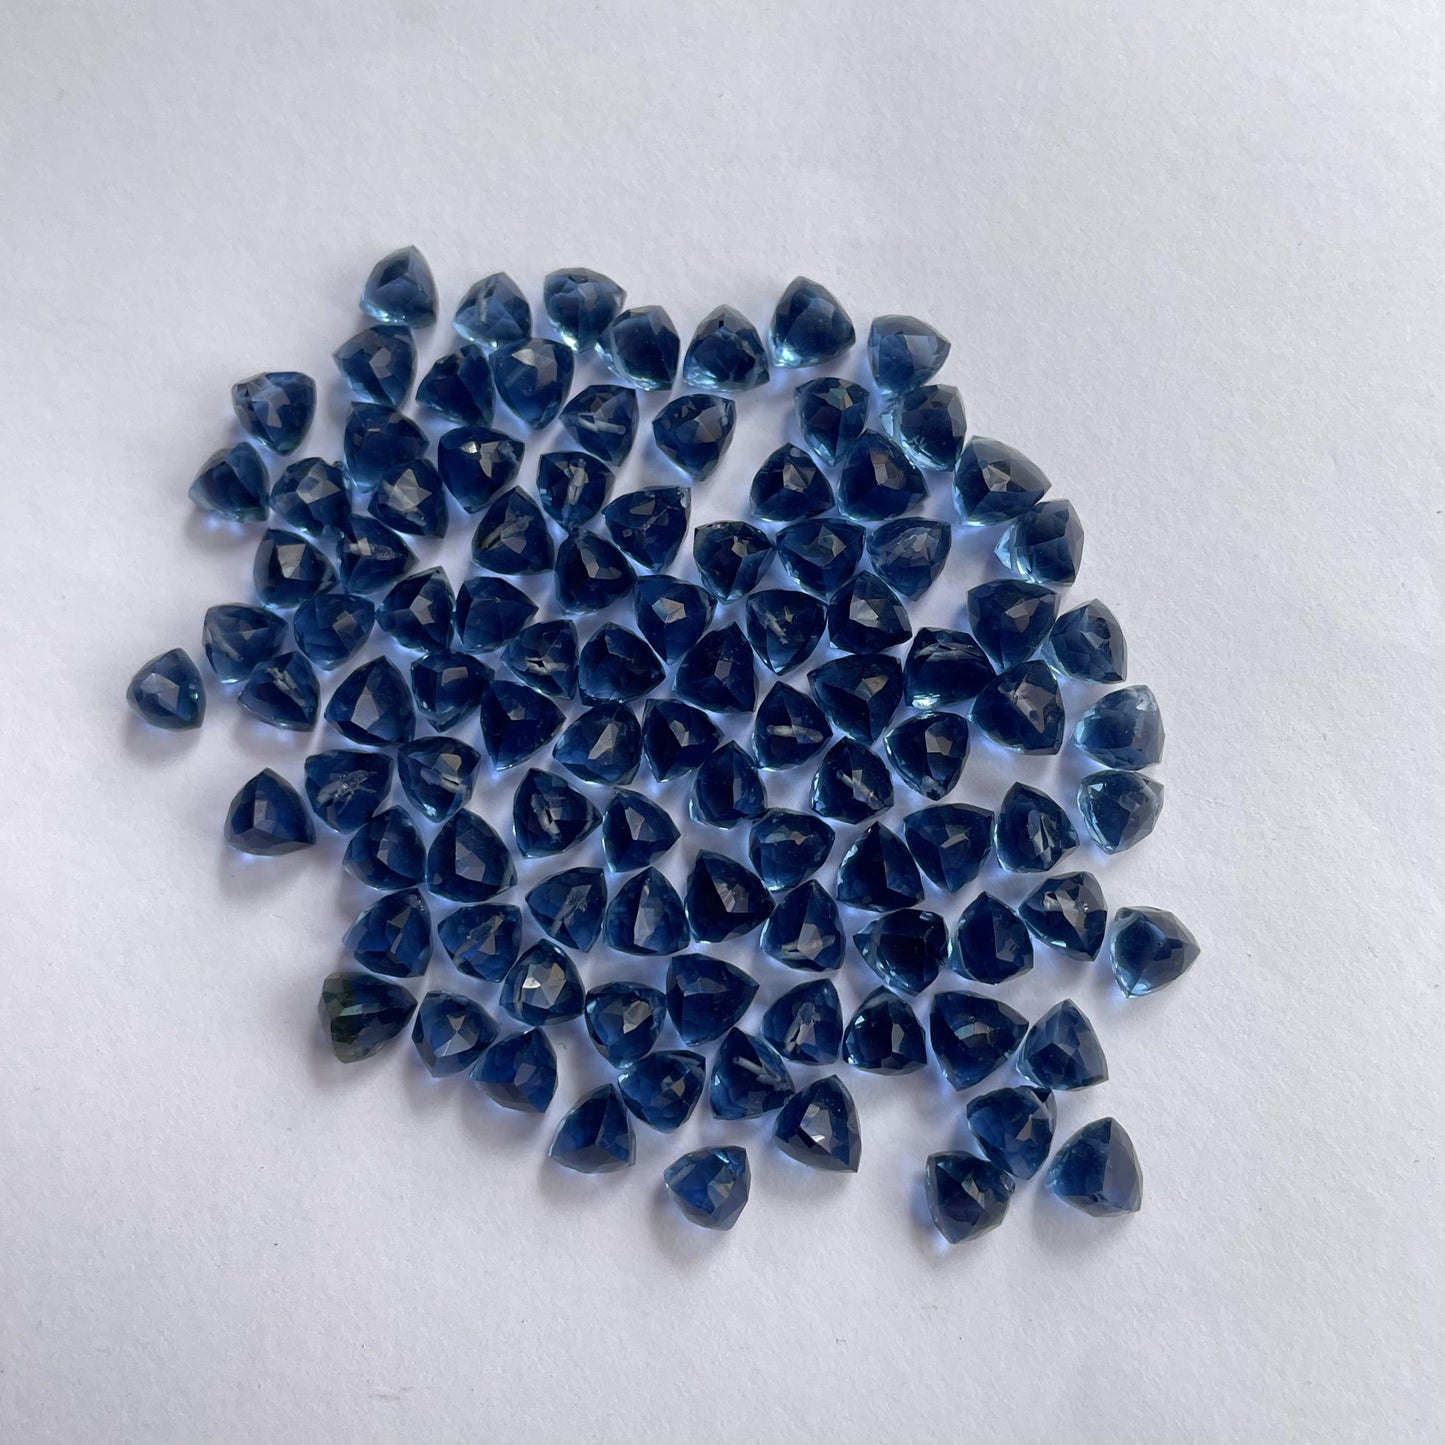 London blue topaz Faceted Nice Quality (7mm) Trillion Shape